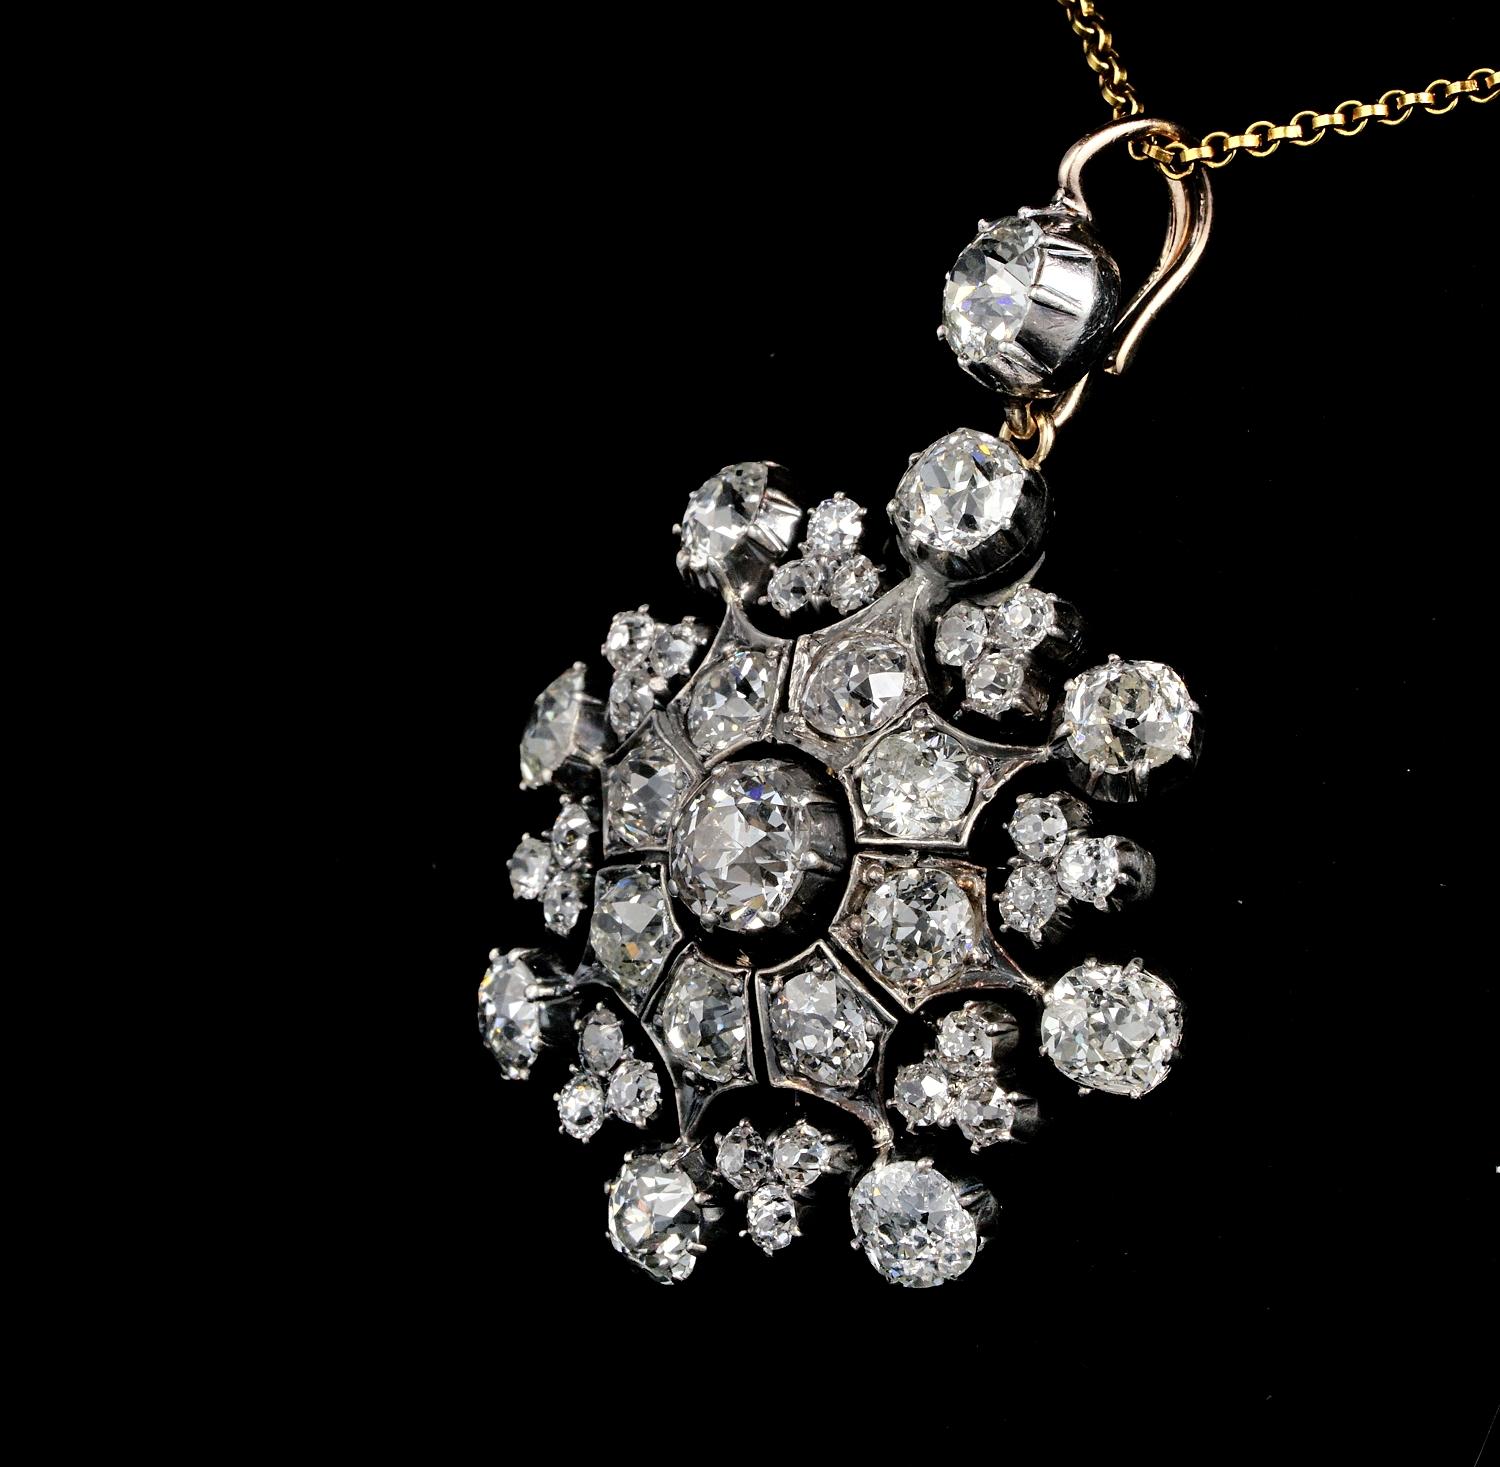 Victorian Era 13.50 Ct Old Cut Diamond Brooch Pendant For Sale 1